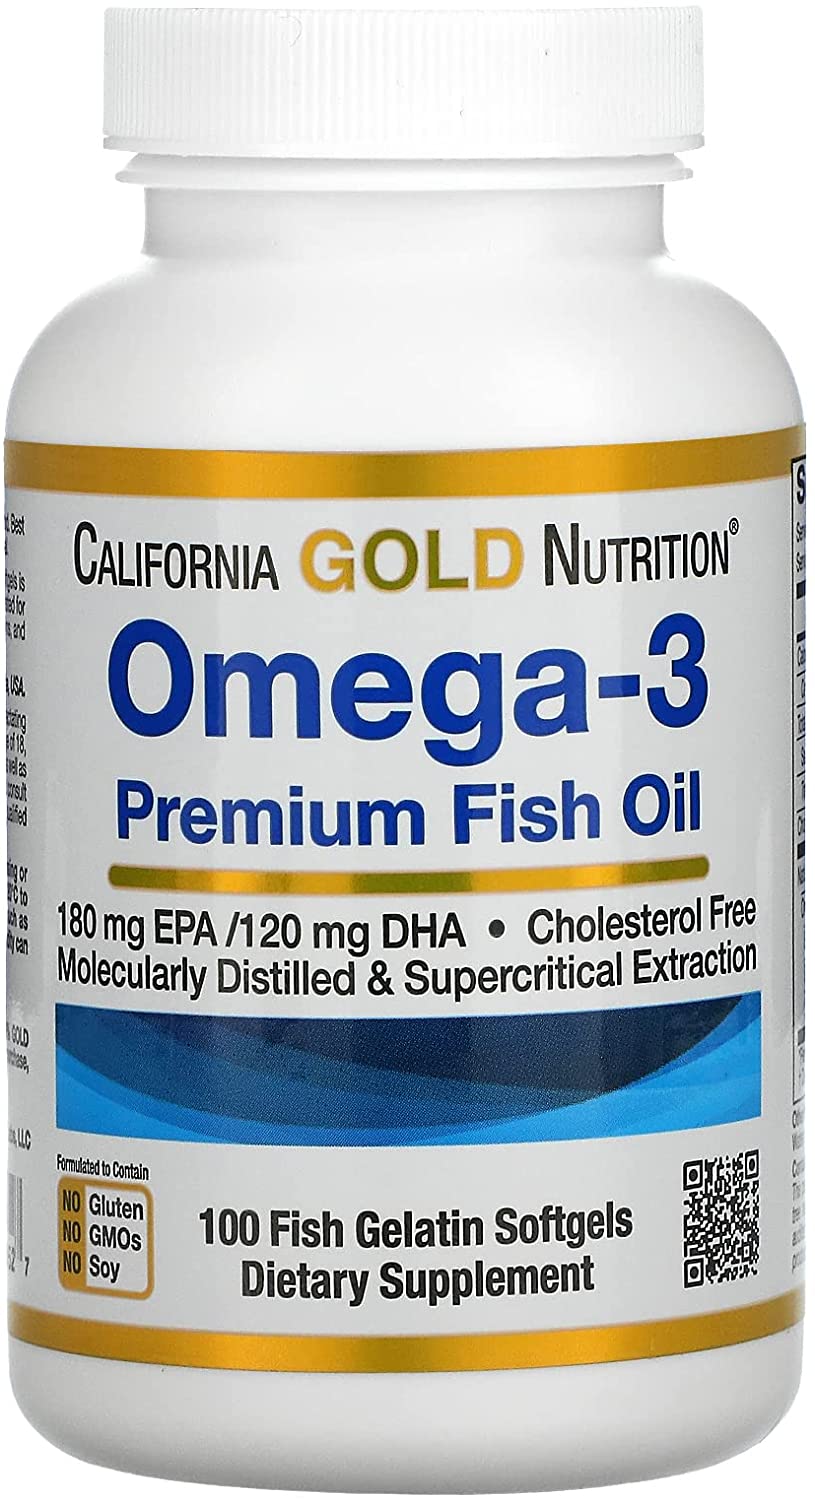  Premium Fish Oil epa dha dha&epa カリフォルニア ゴールド ニュートリション プレミアム フィッシュオイル dha epa オメガ 3 サプリメント EPAサプリ オイル omega3 サプリ 海外 健康 サポート コレステロール 送料無料